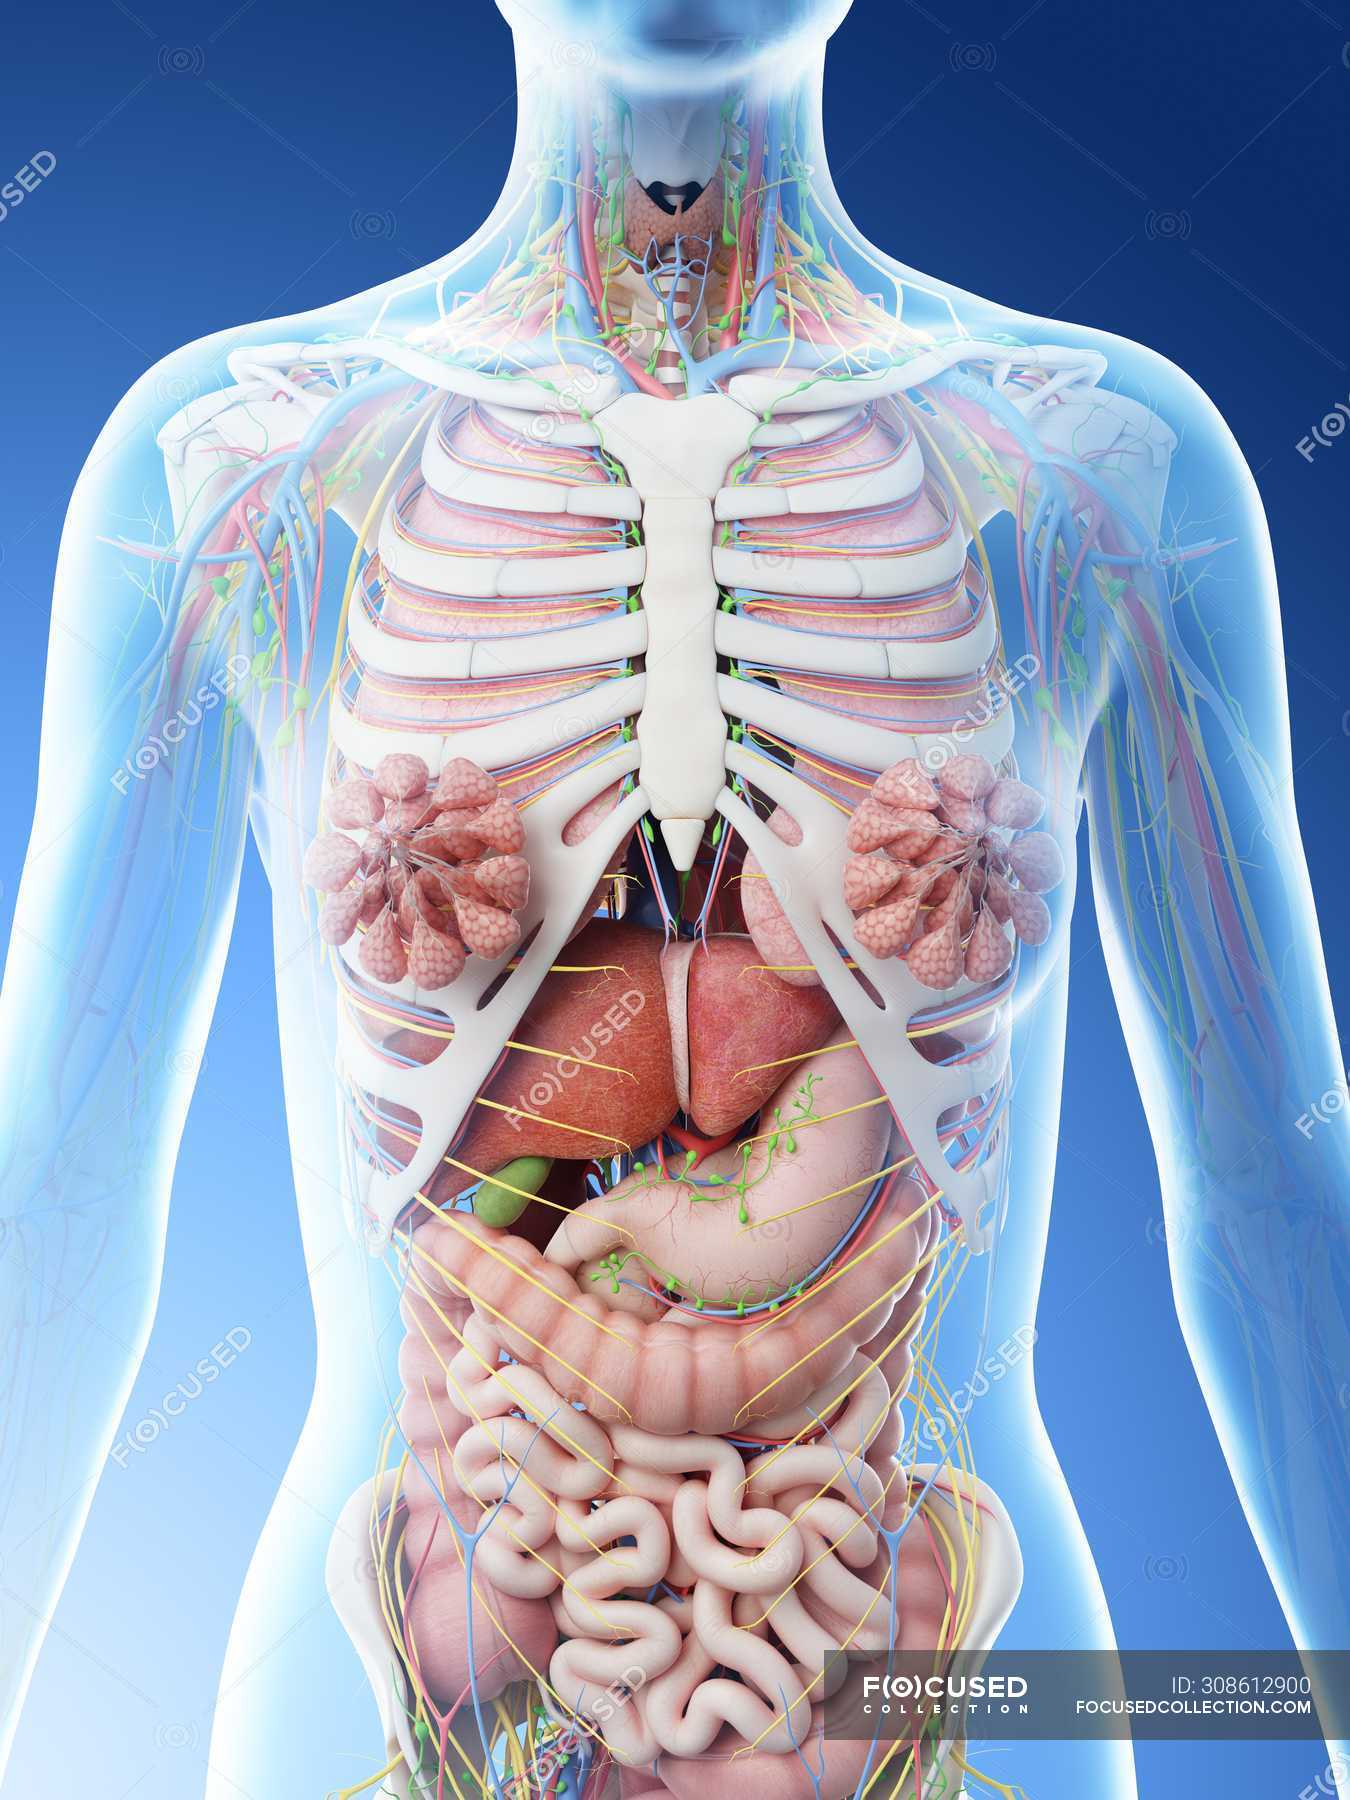 Hei! 21+ Grunner til Female Organs Diagram? Anatomy posters and anatomy